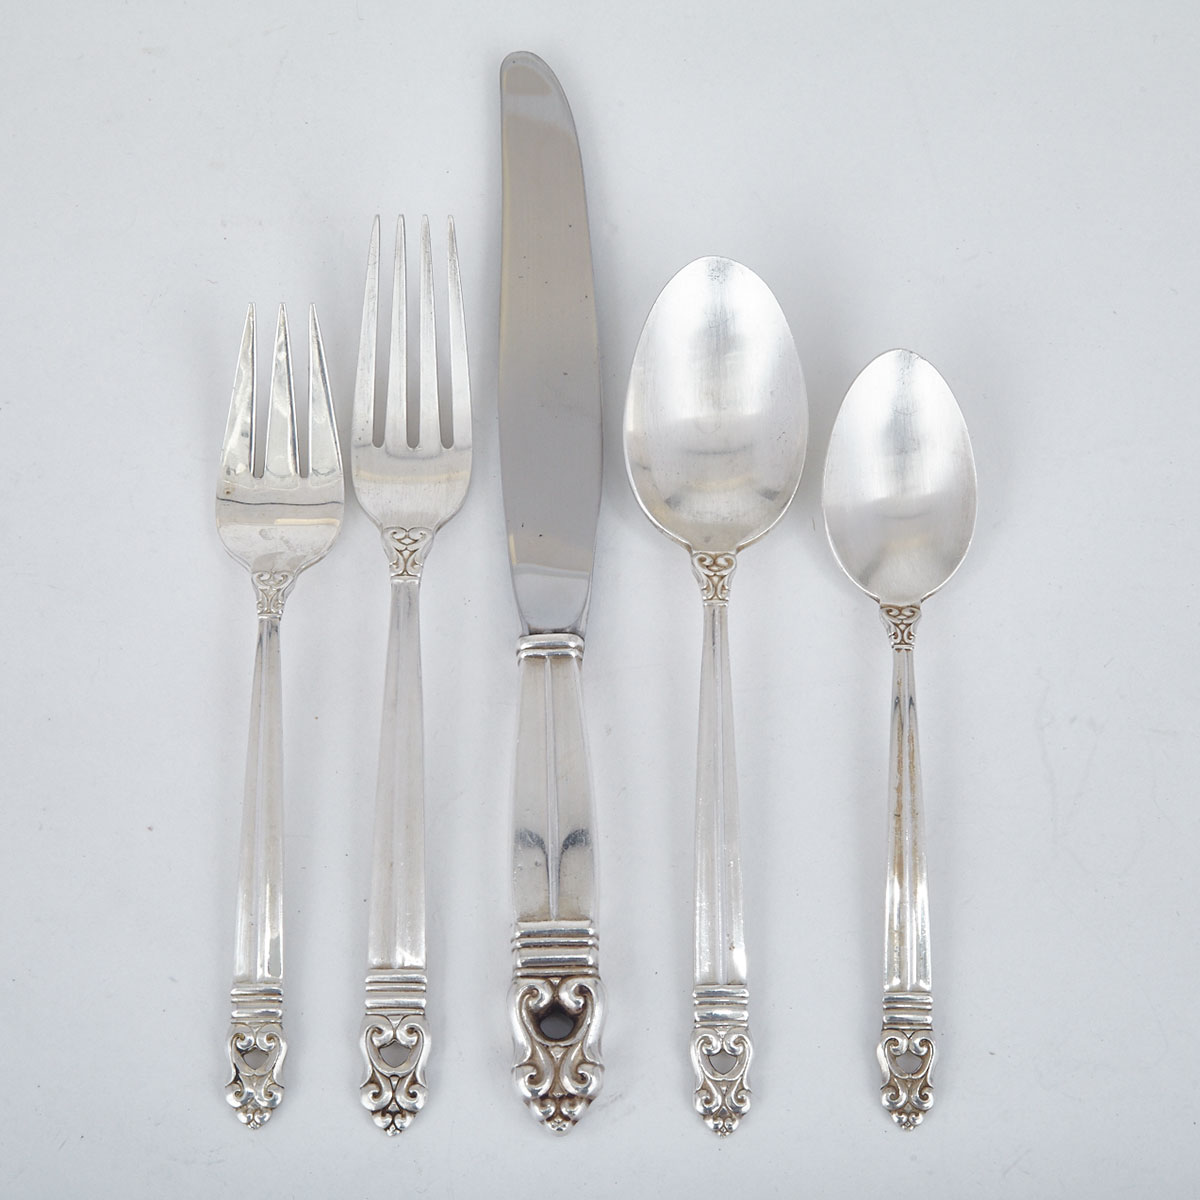 American Silver ‘Royal Danish’ Pattern Flatware Service, International Silver Co., Meriden, Ct., 20th century